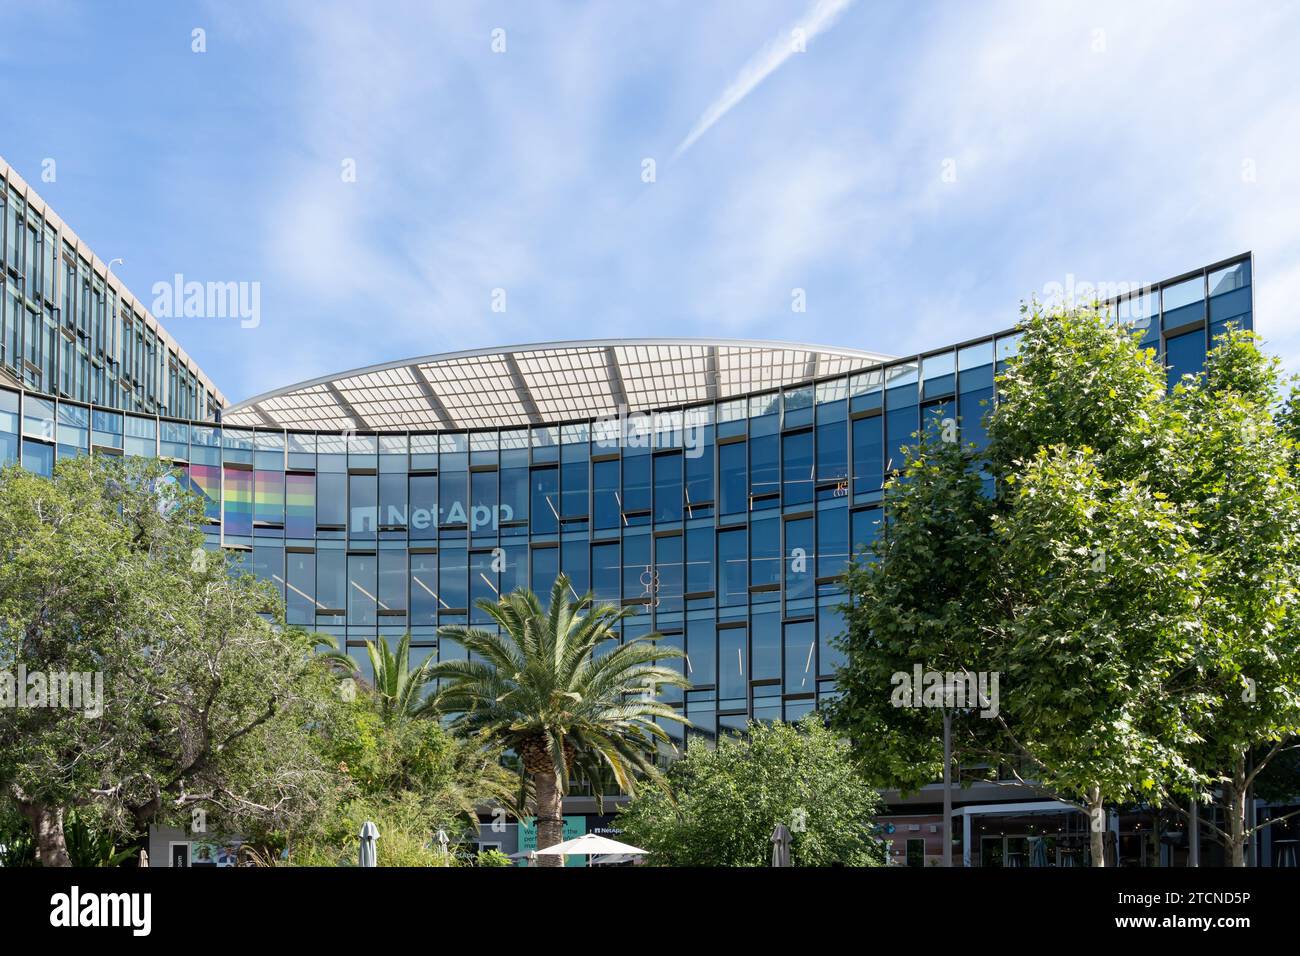 NetApp headquarters in San Jose, California, USA Stock Photo